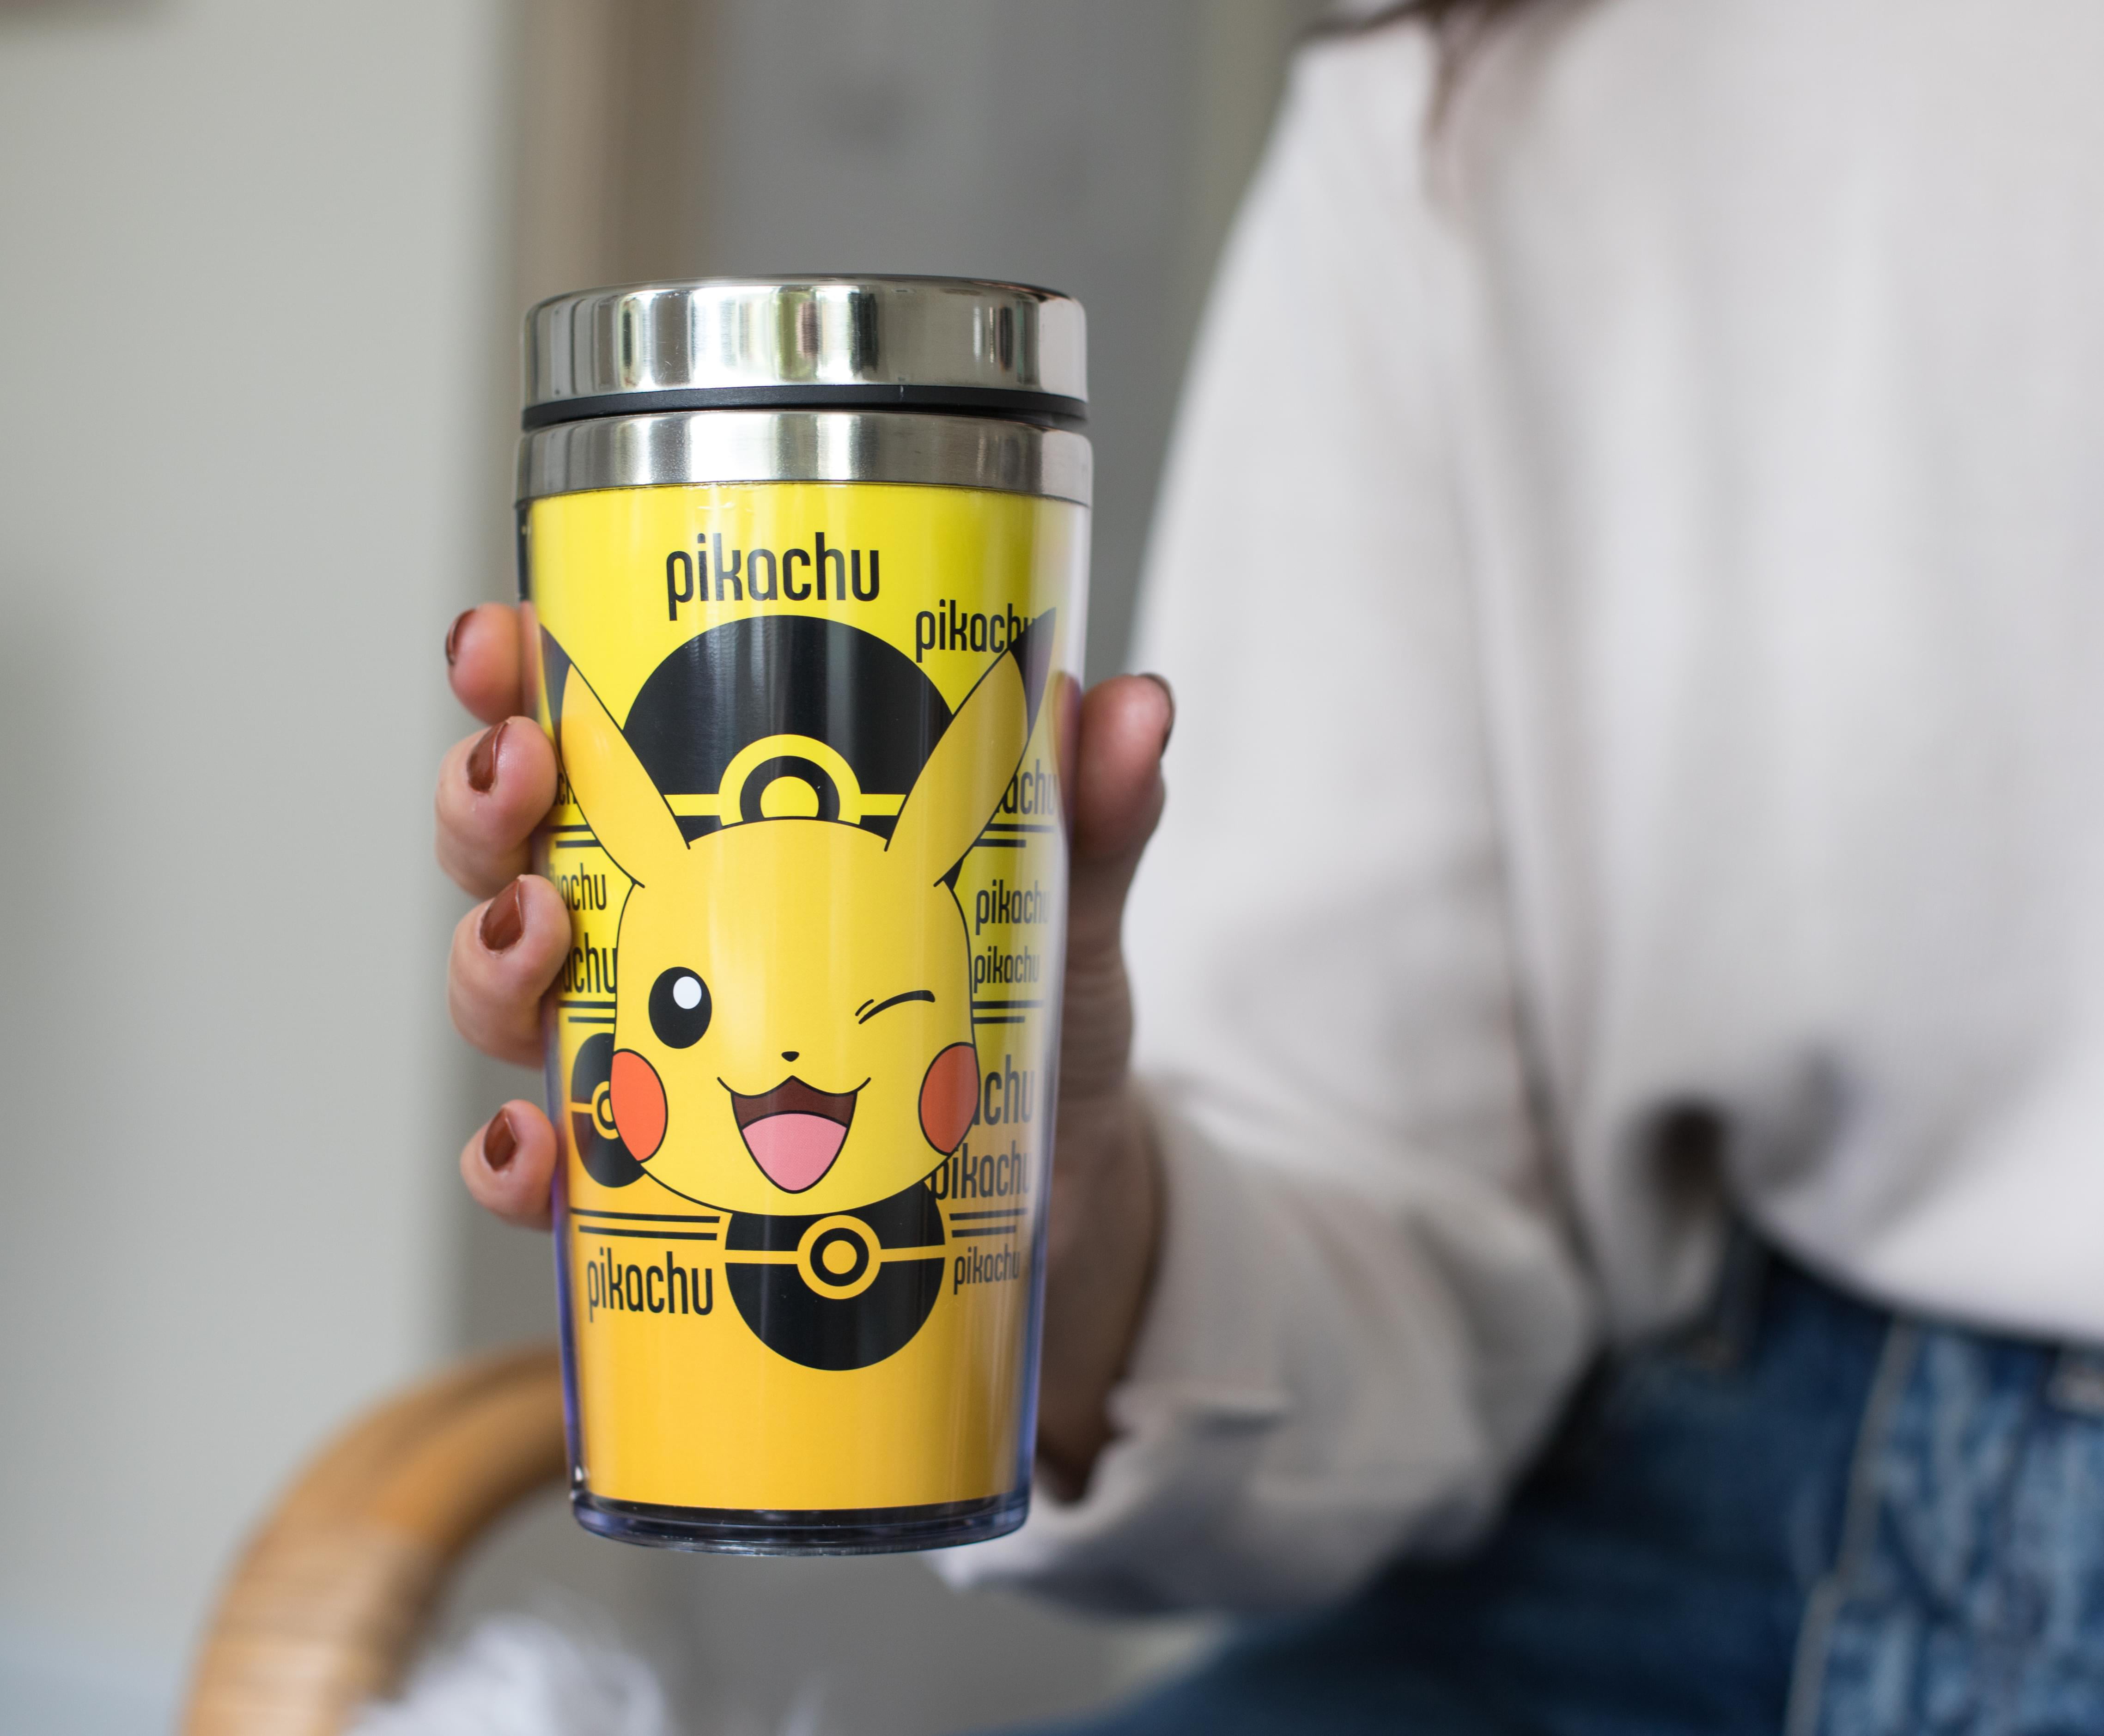 Pokemon Lenticular Pikachu 16oz Travel Mug